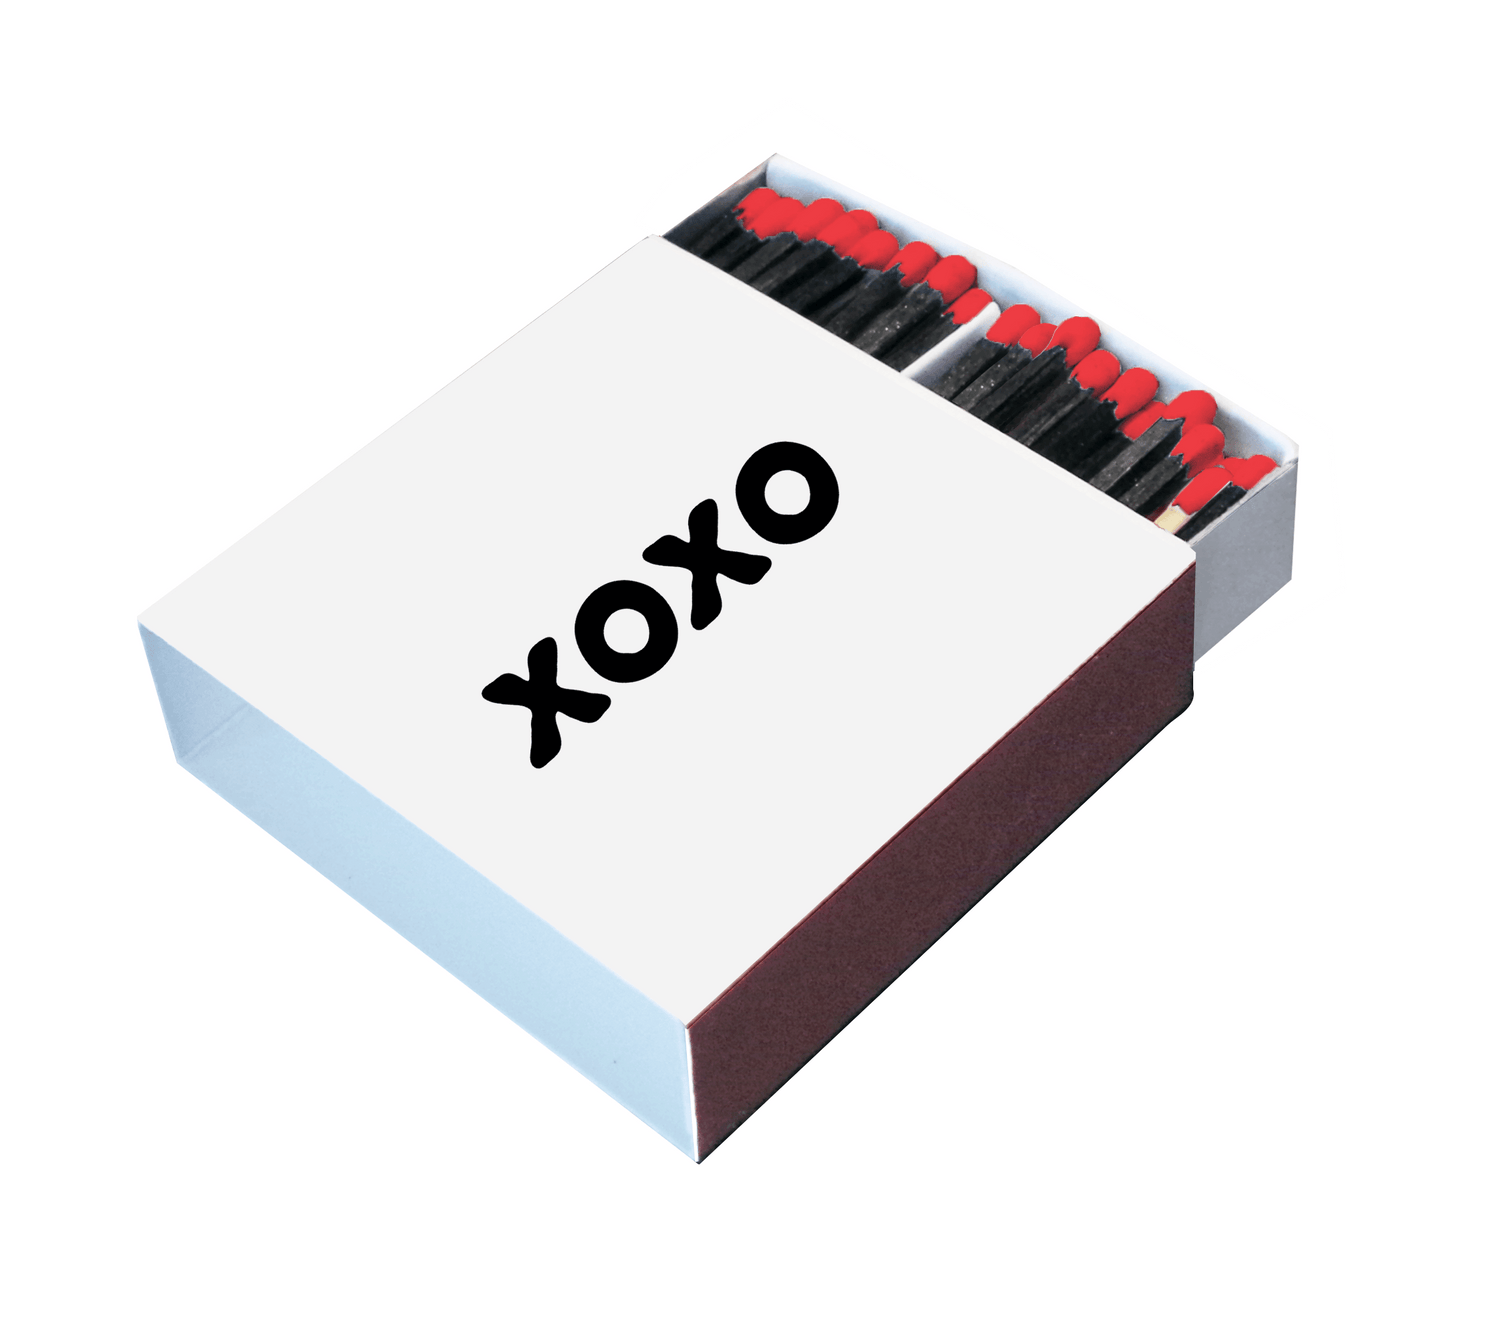 Matchboxes - XOXO - Doodlations Coffee Bar & Boutique